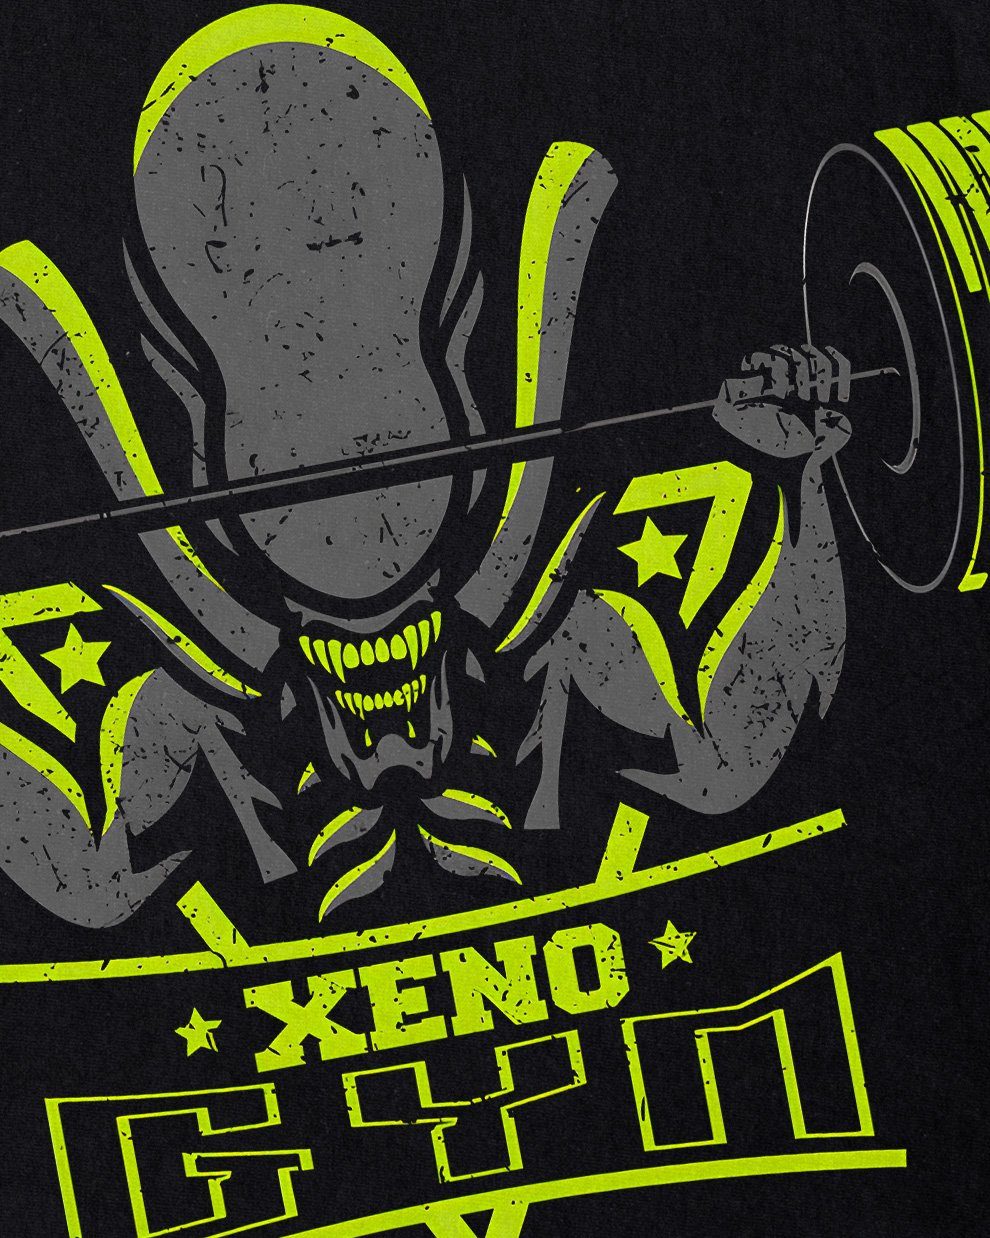 xenomorph studio T-Shirt sport alien fitness Kinder Print-Shirt style3 Alien Gym